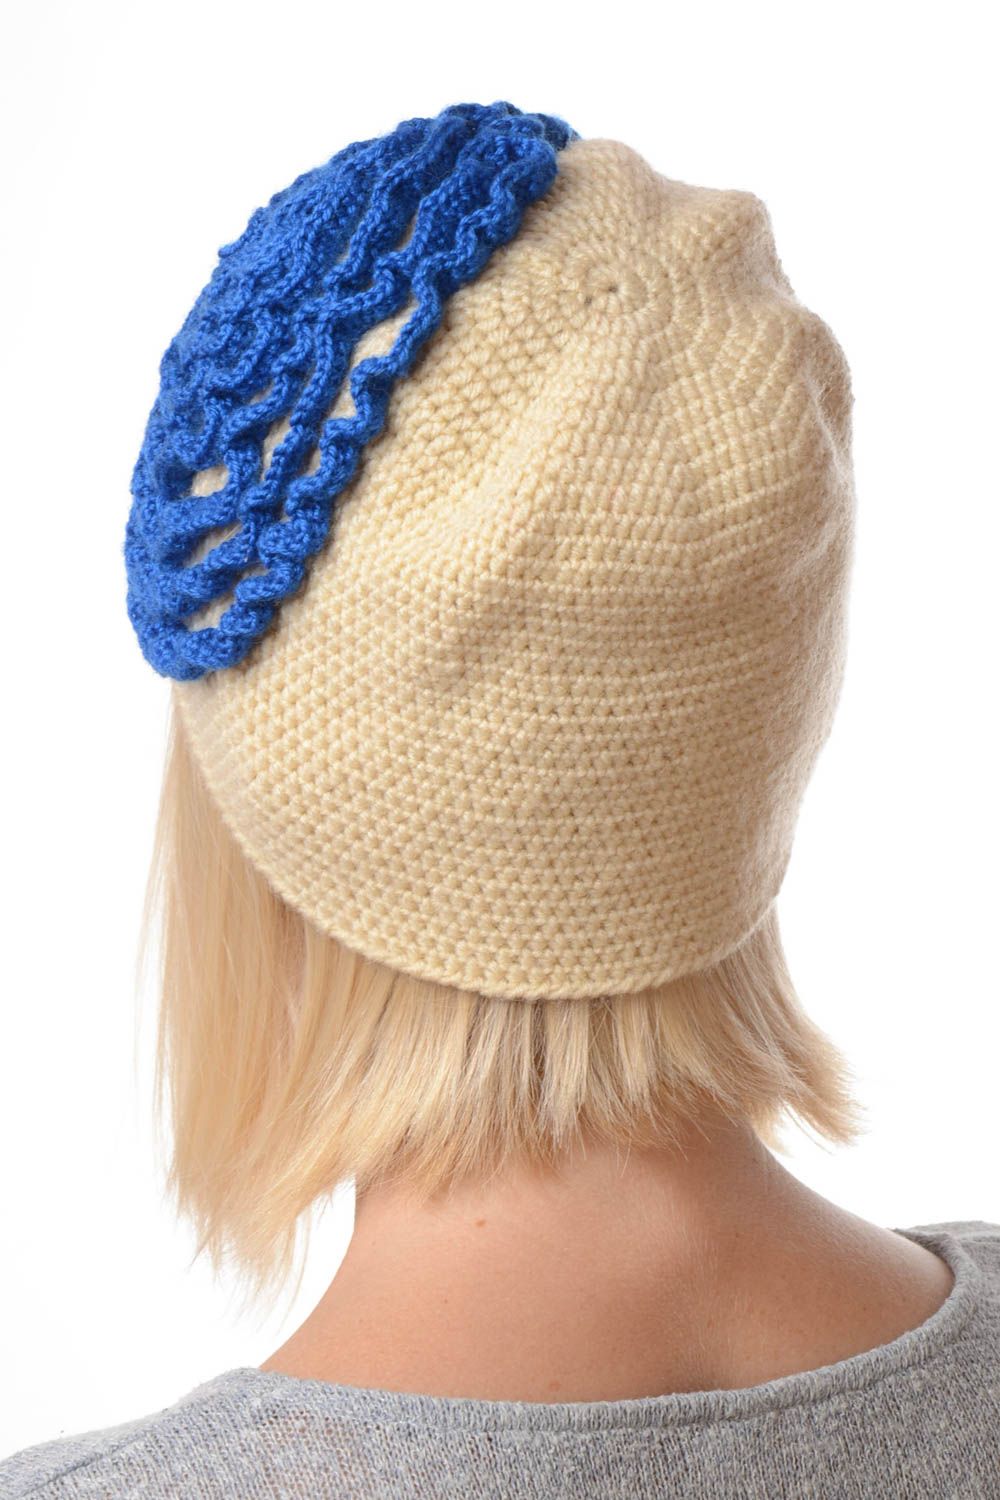 Womens hat crochet accessories handmade crochet hat fashion accessories photo 2